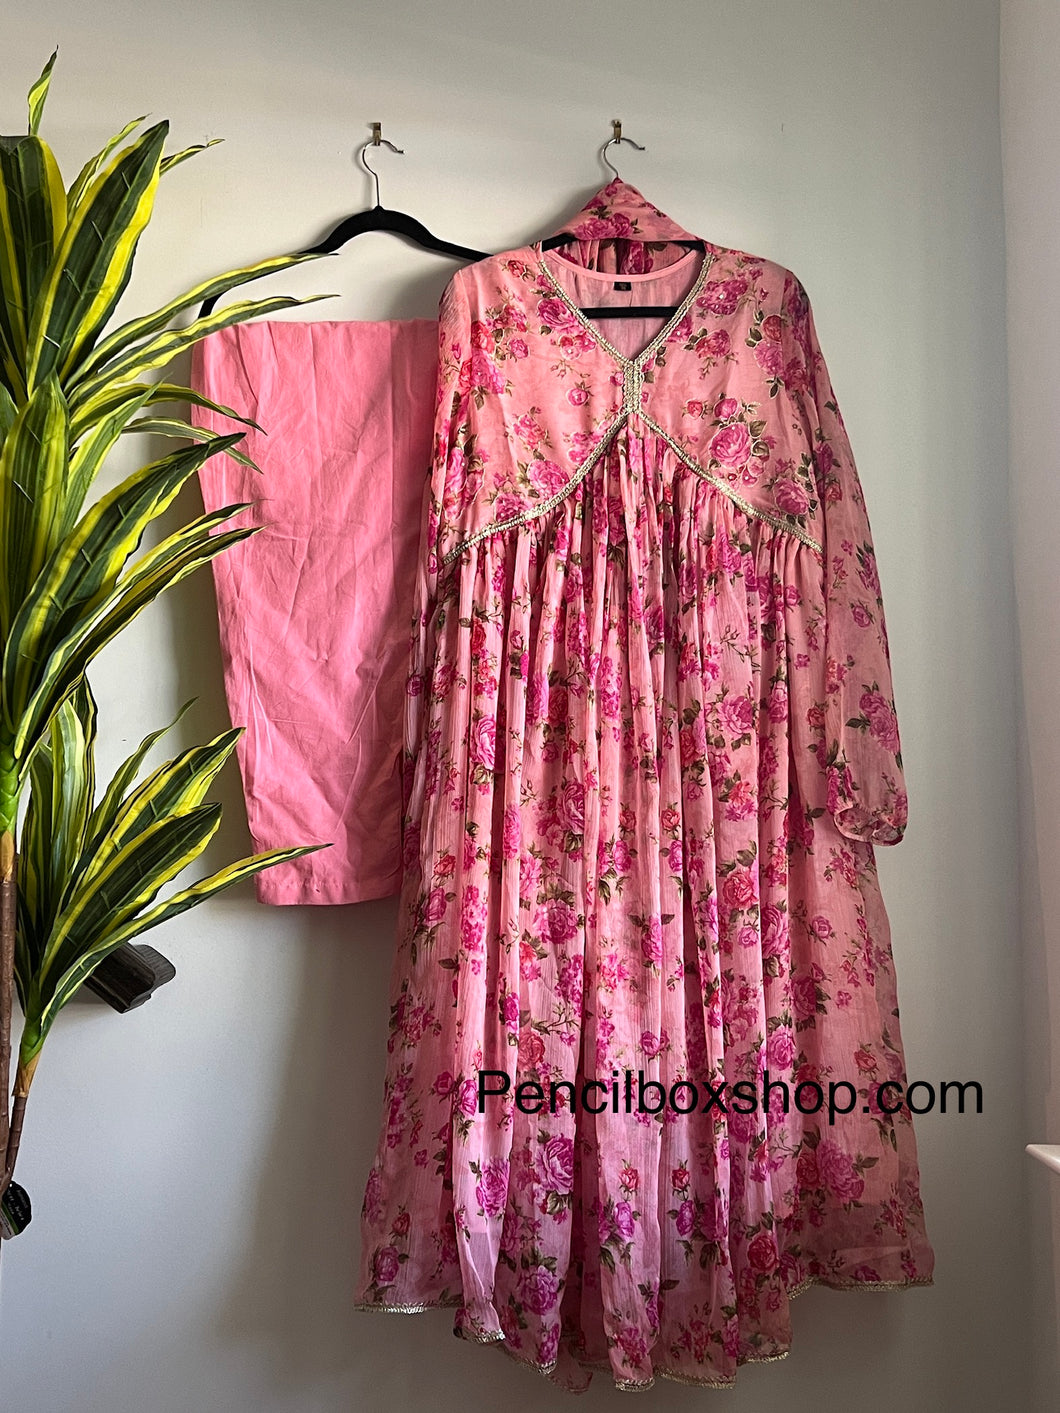 3 pc Soft Cotton Alia cut Pink floral flare Dress women Clothing